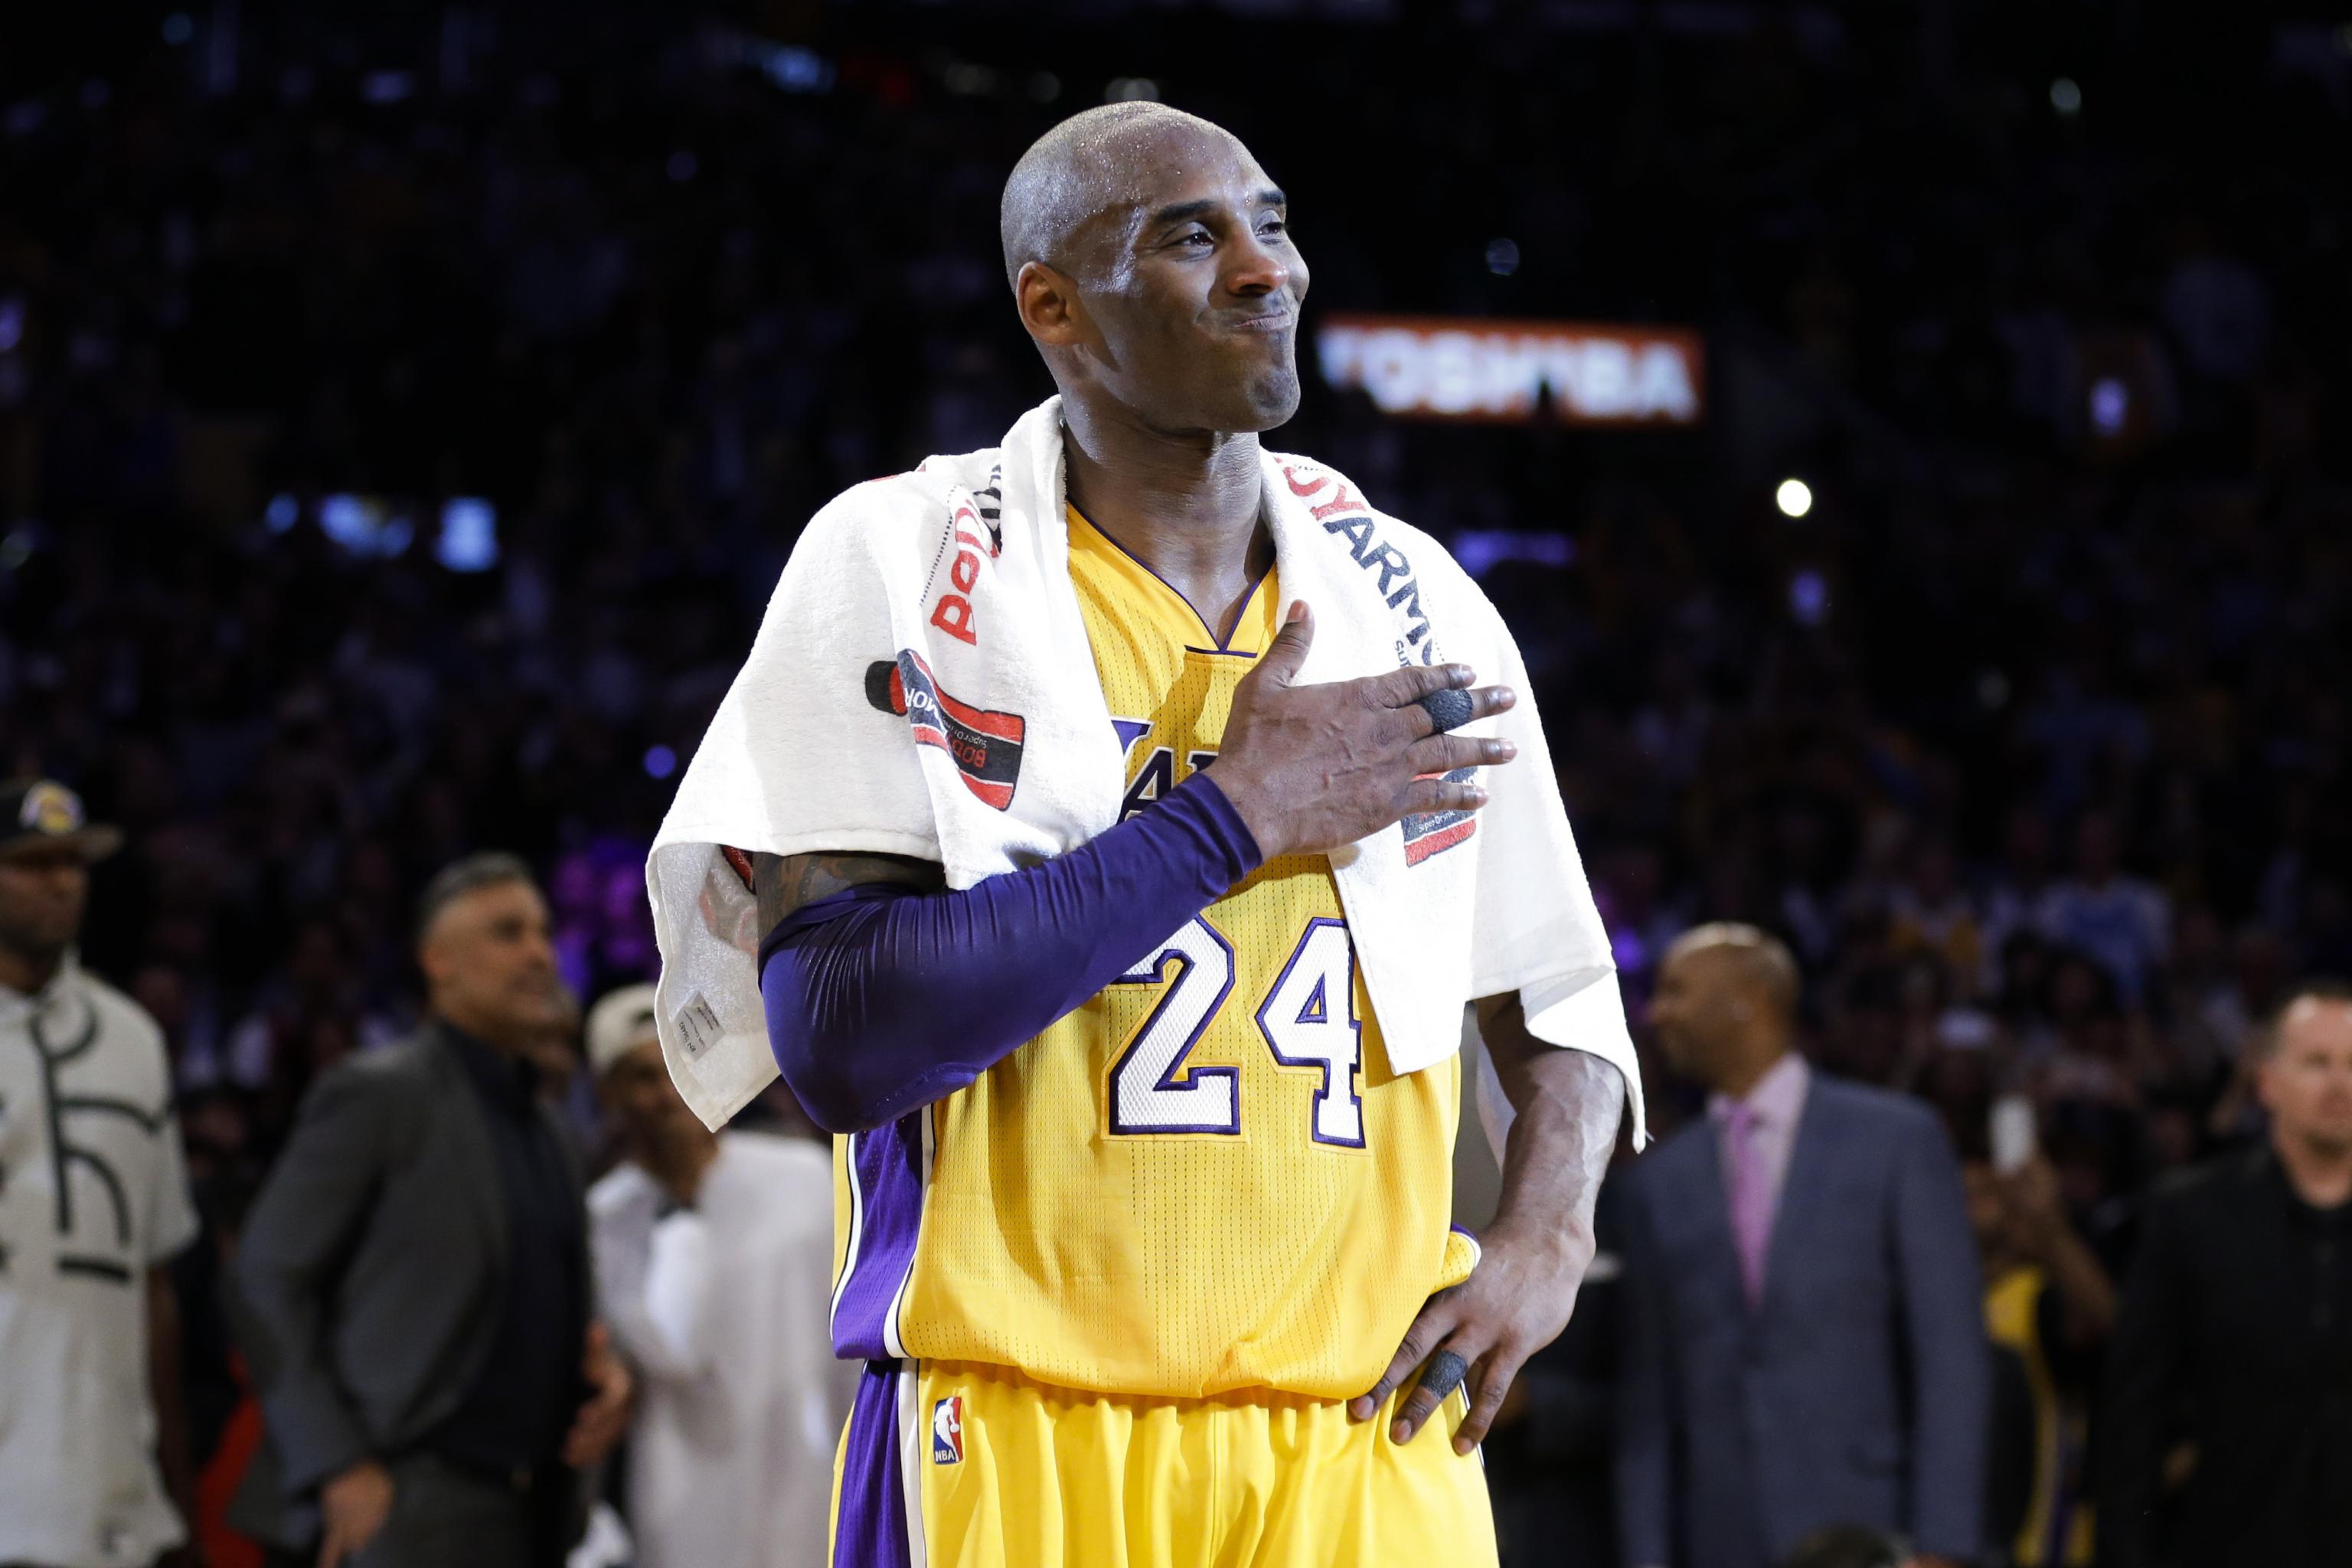 No. 8 Or No. 24? 'Mamba' Jersey Sports Both Kobe Bryant Numbers - CBS Los  Angeles